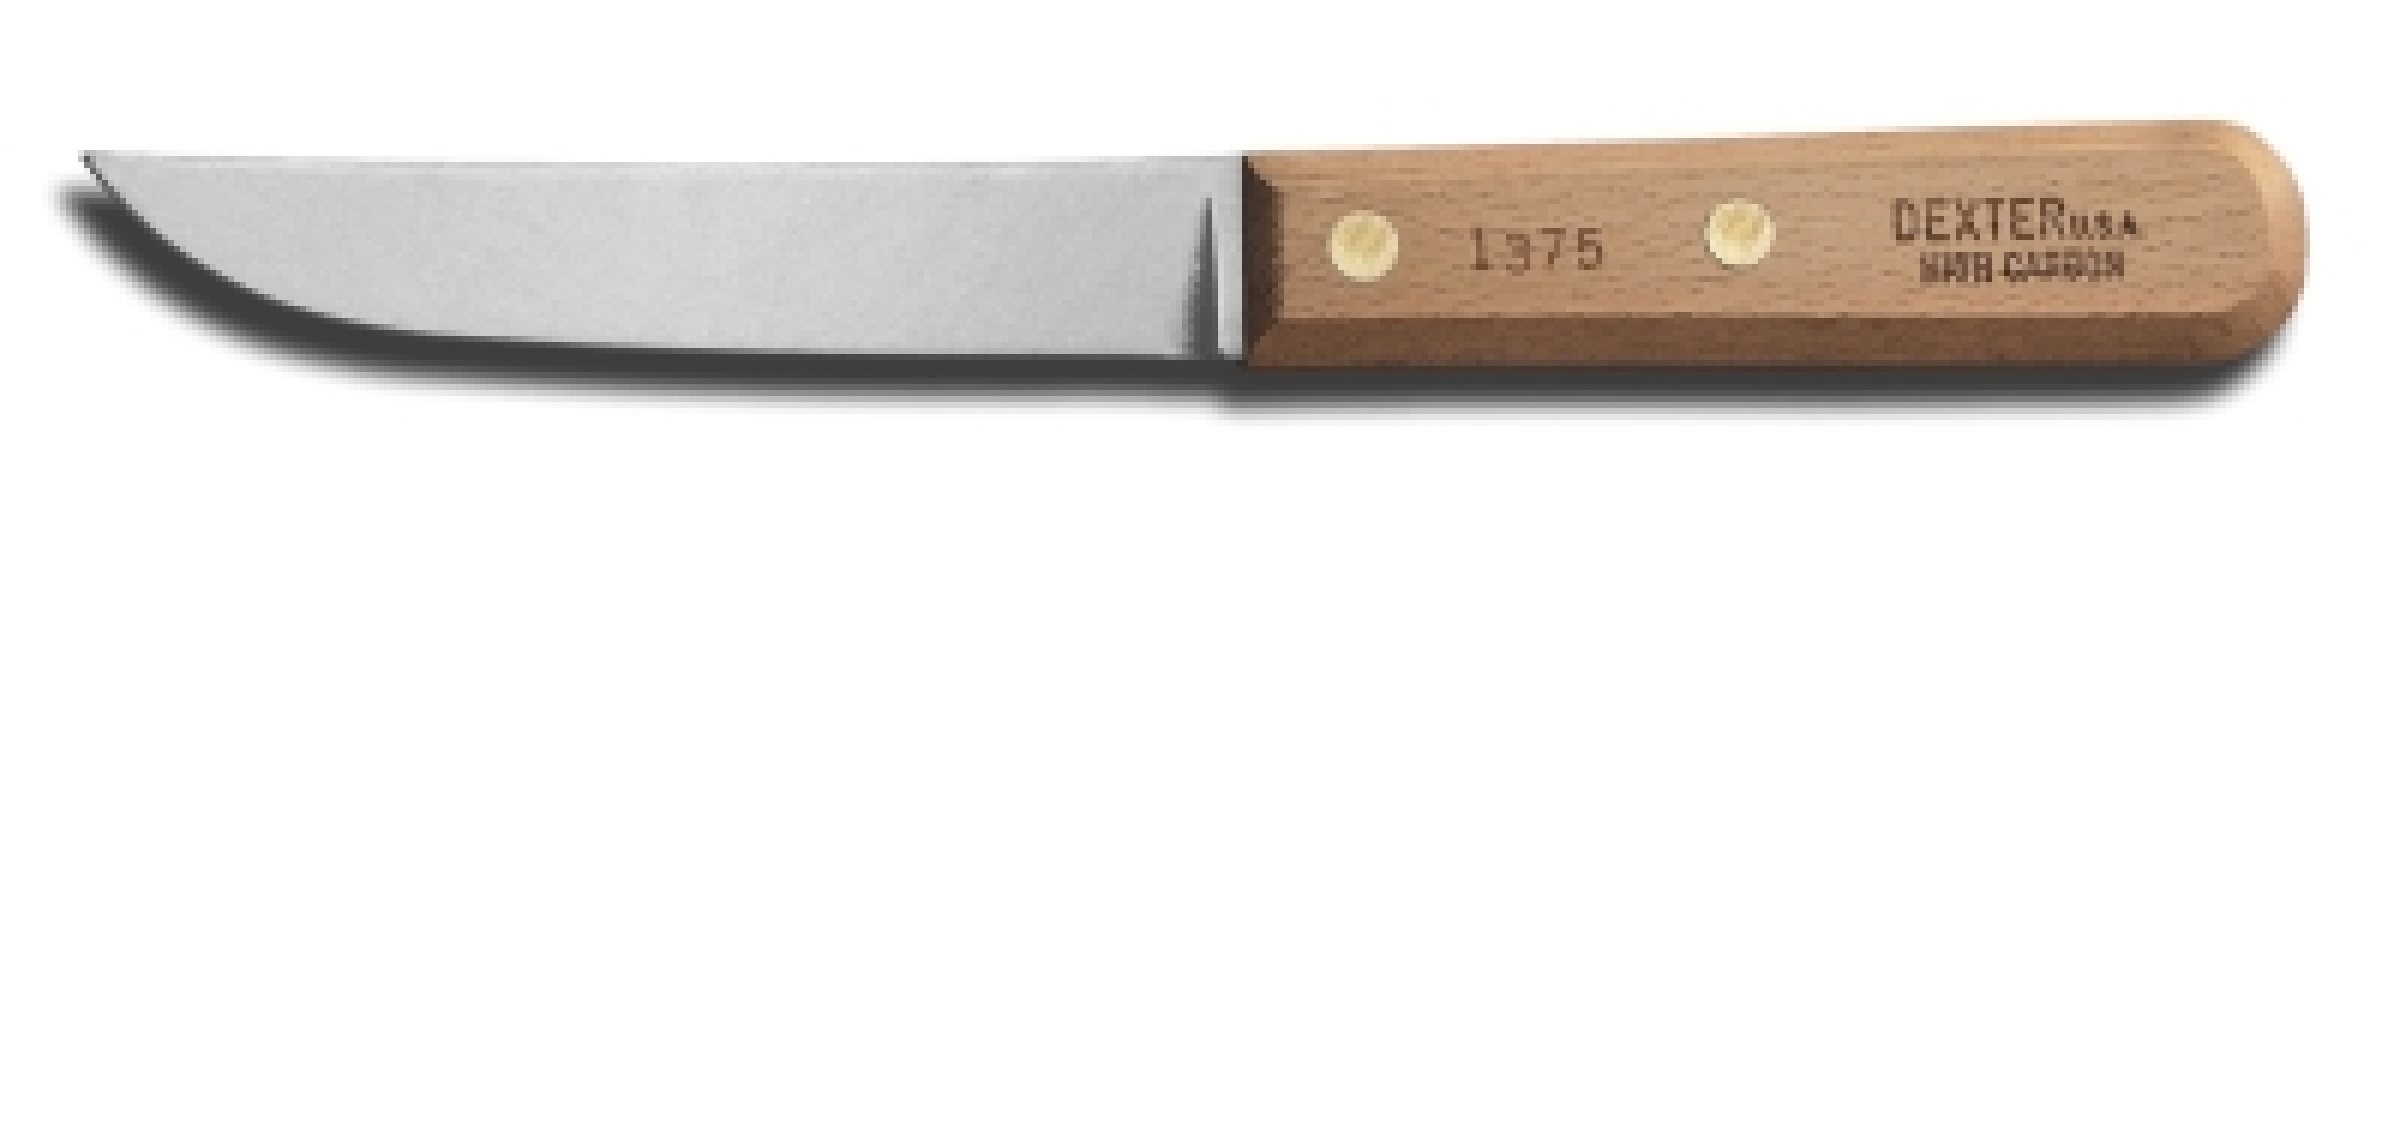 Dexter 6 Wide Boning Knife